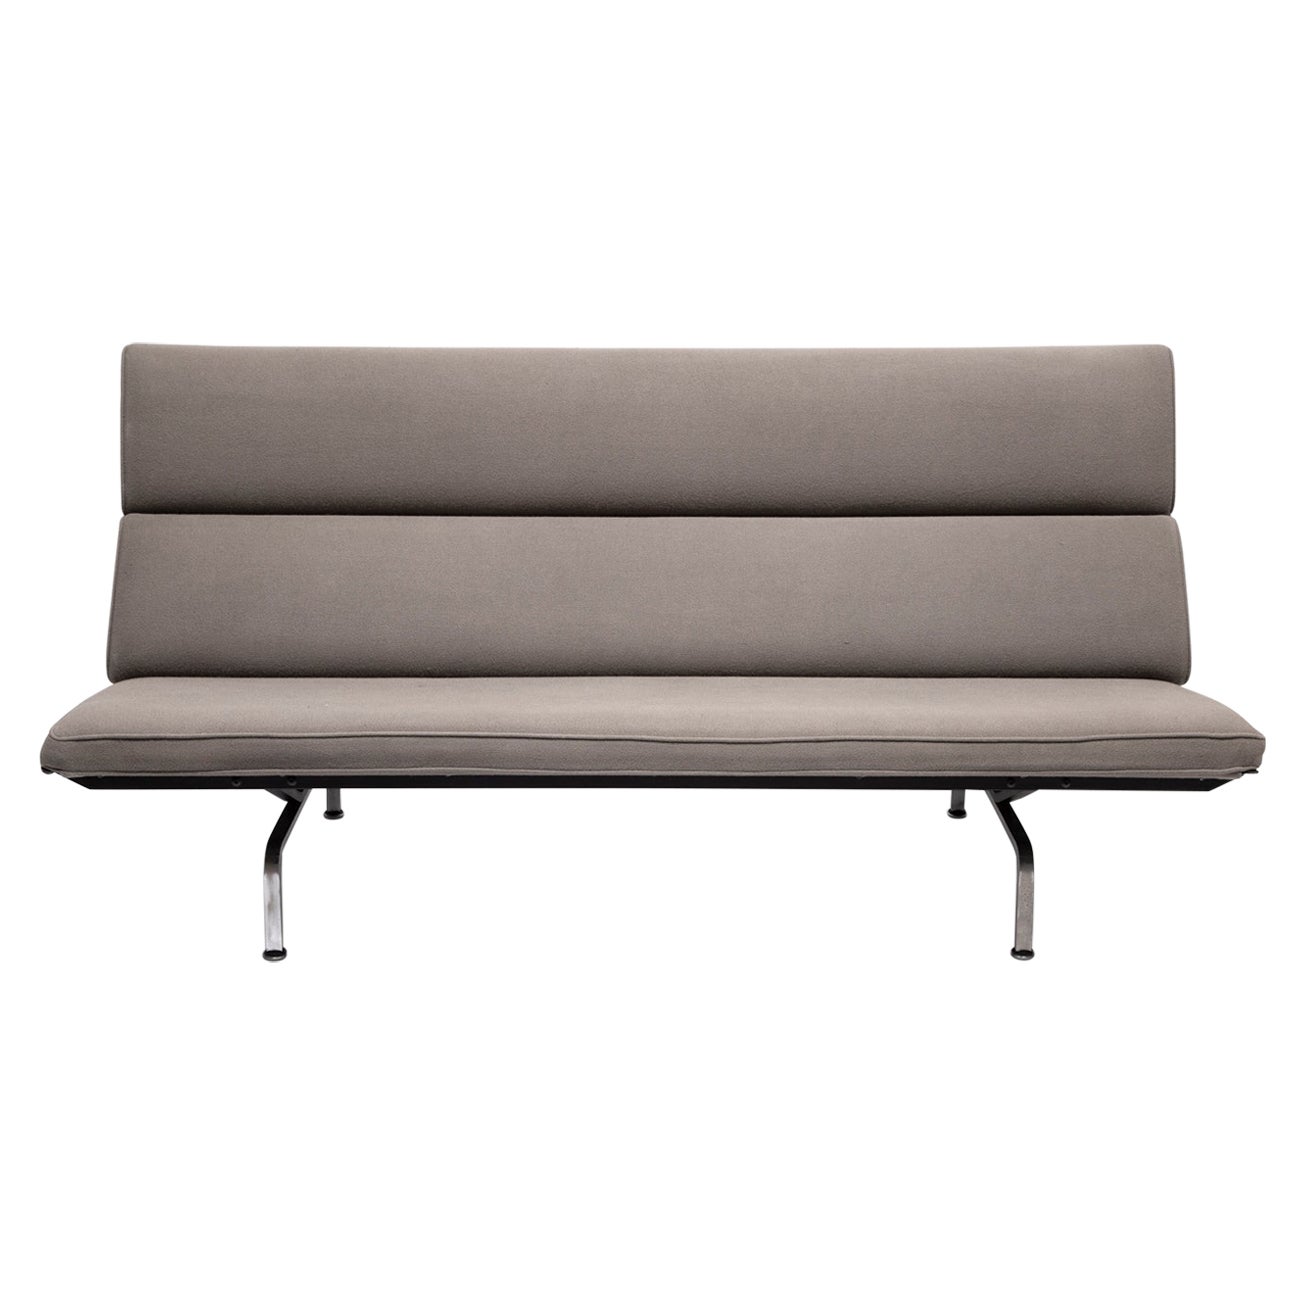 « Compact Sofa » Ray & Charles Eames cadeau Godparents à Eric Saarinen